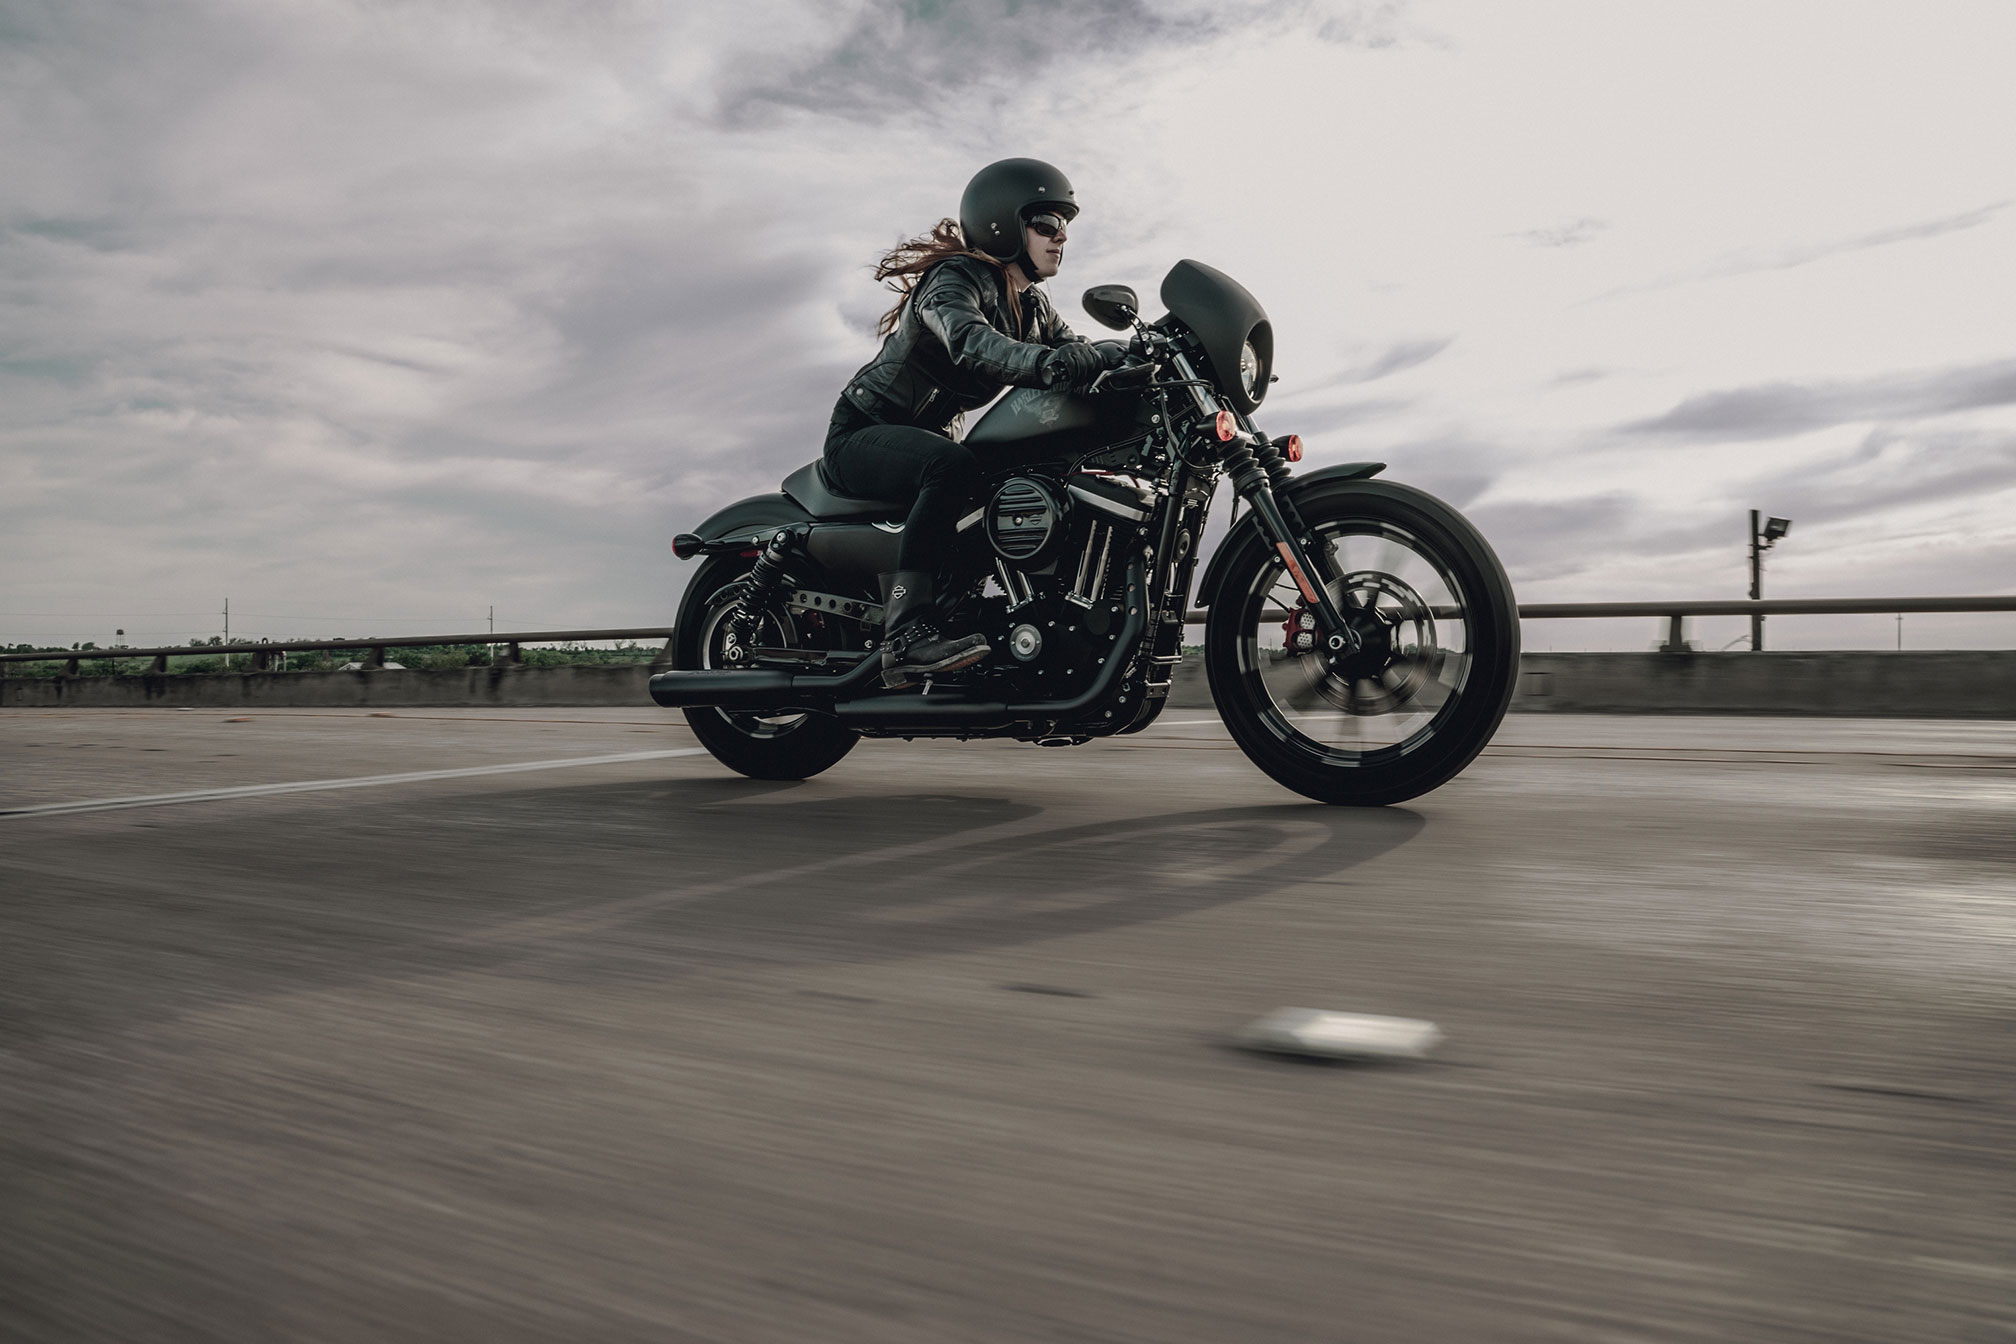 2019 Harley Davidson Street 500 Review